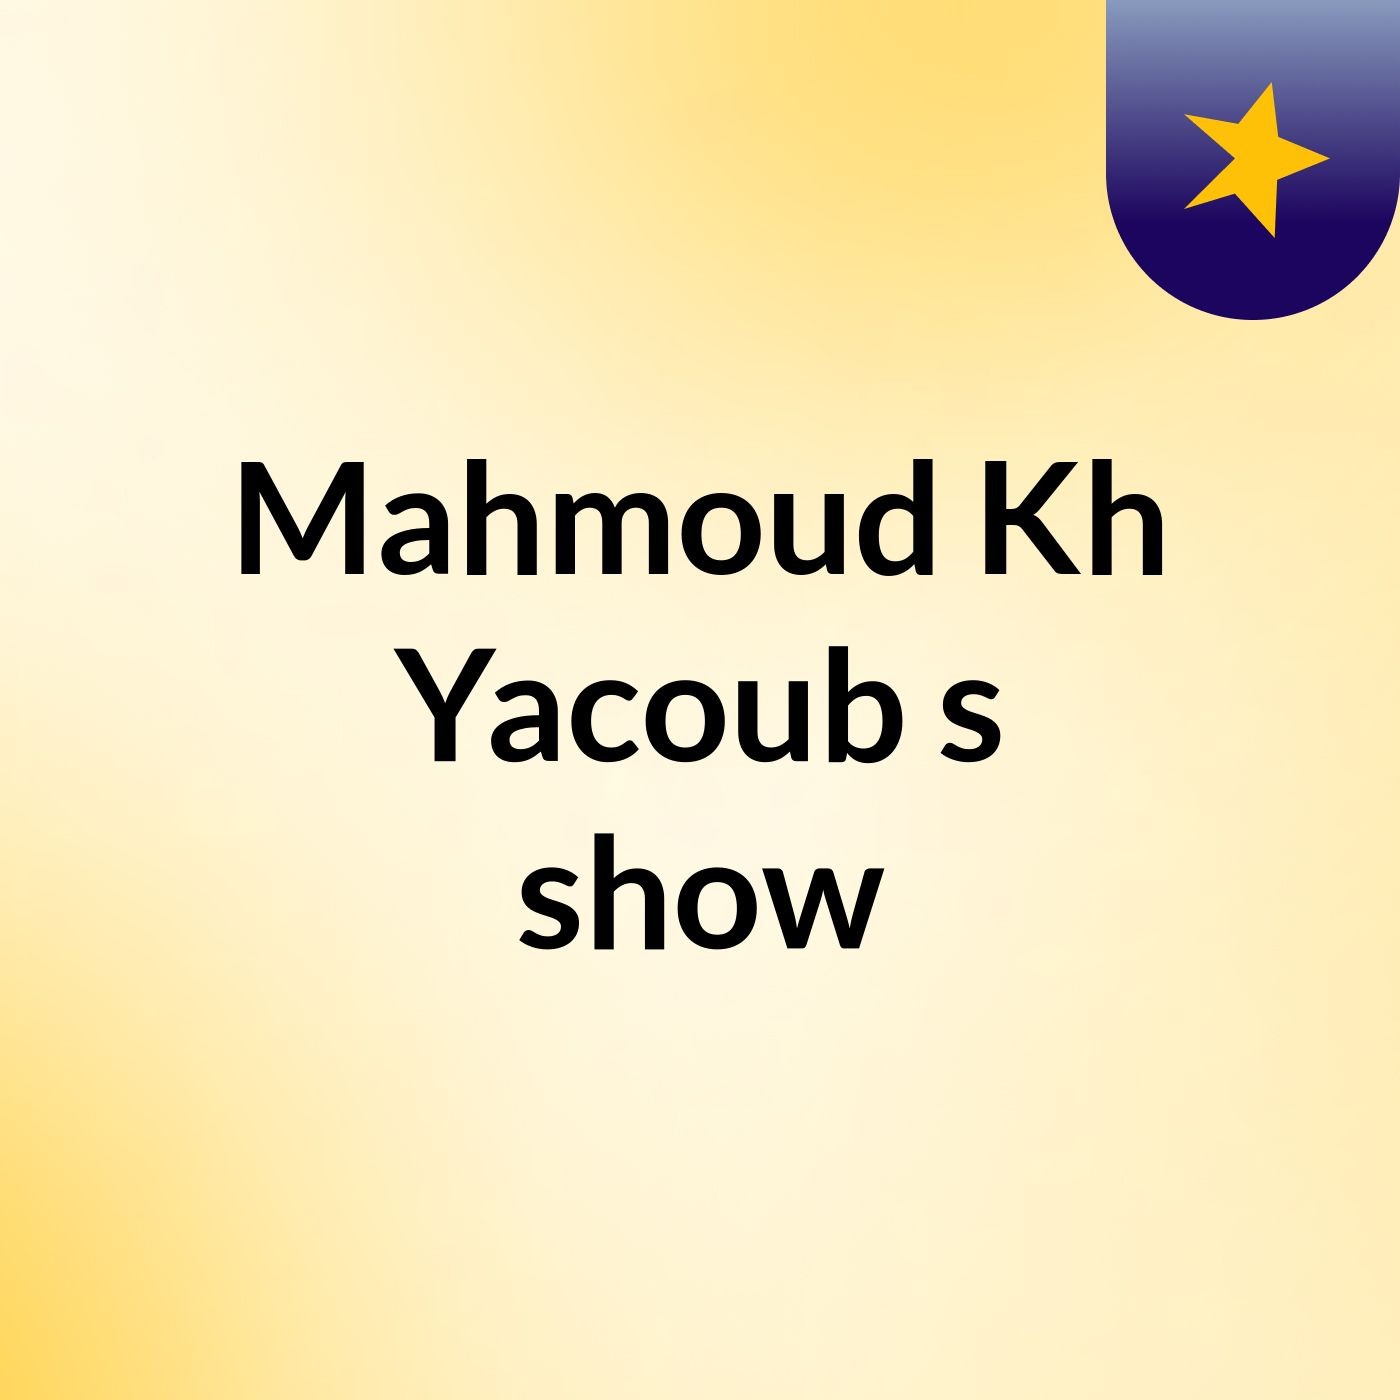 Mahmoud Kh Yacoub's show